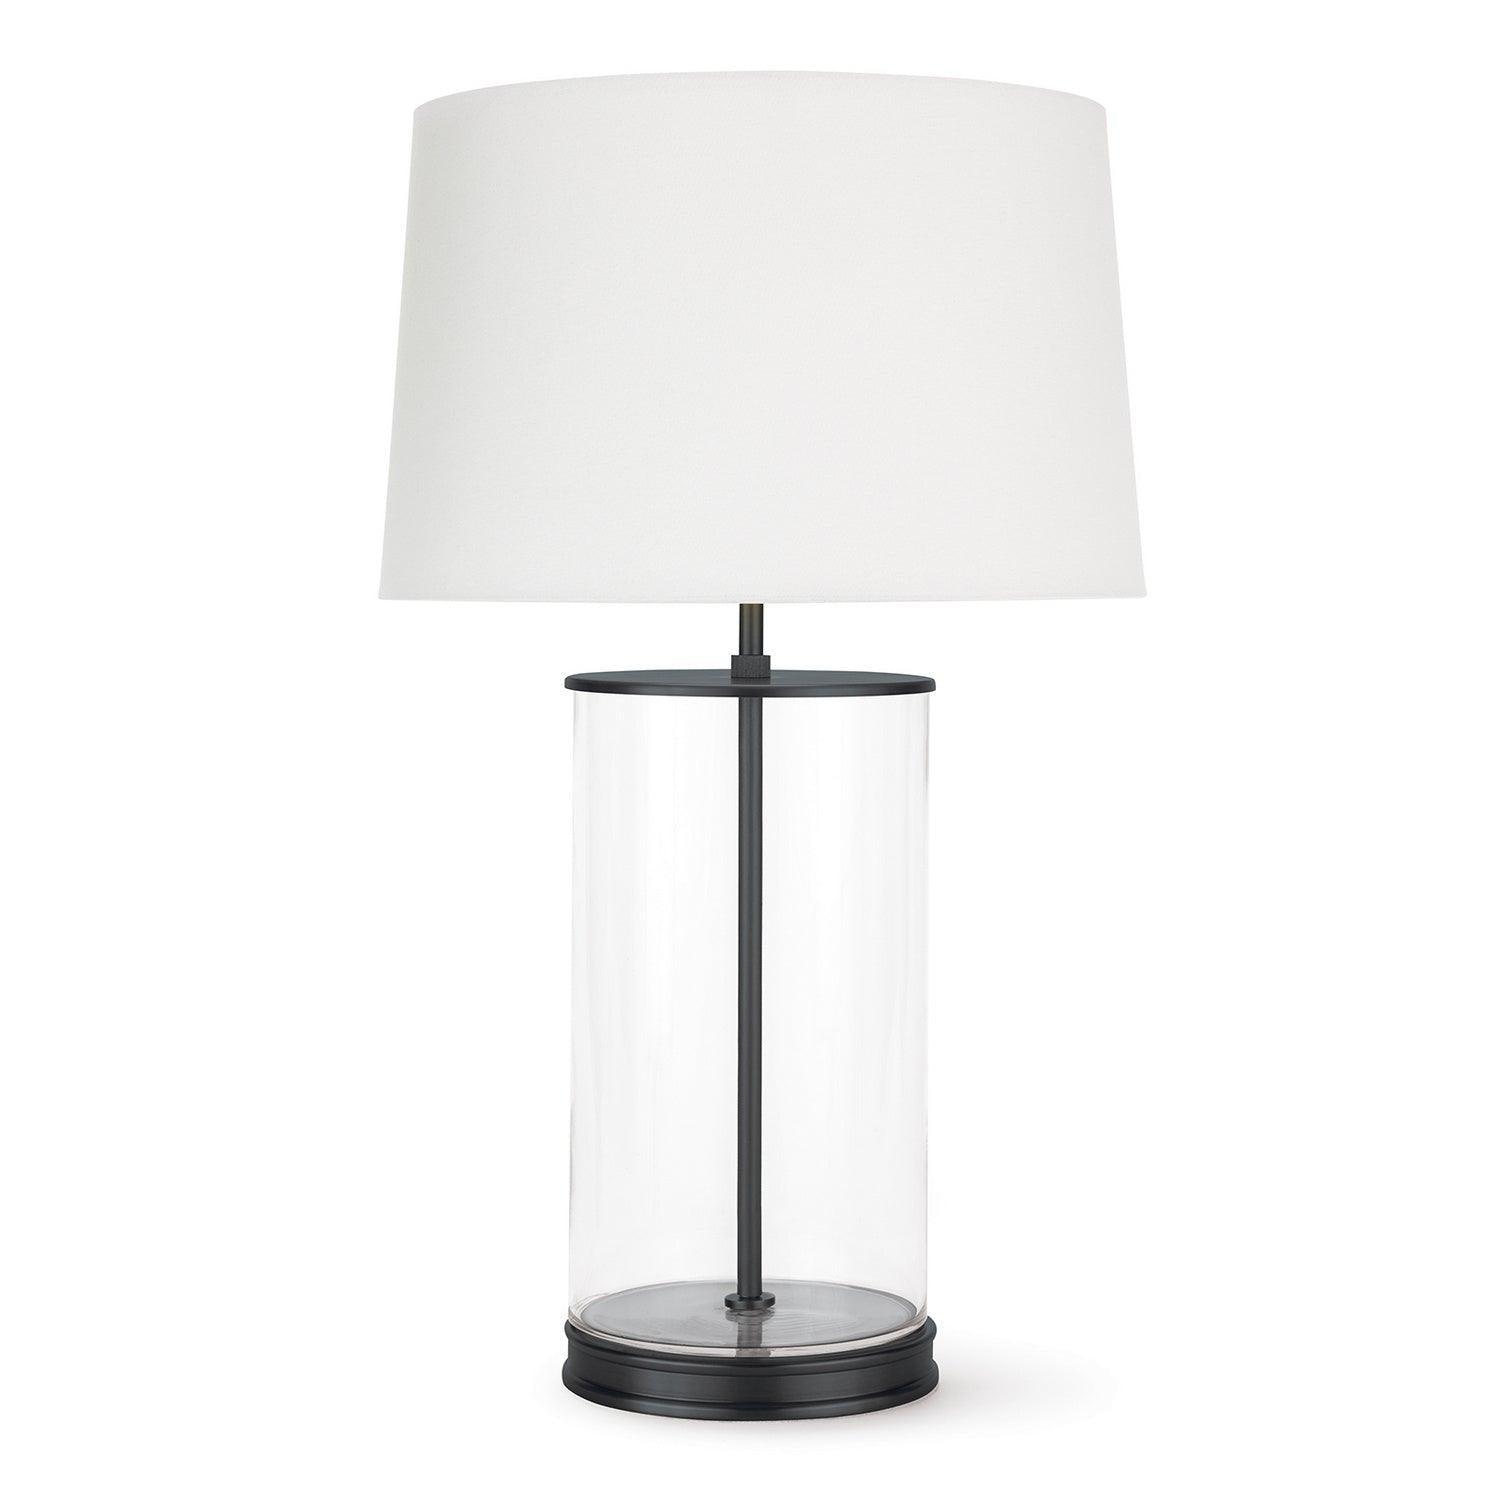 Regina Andrew - Southern Living Magelian Table Lamp - 13-1438ORB | Montreal Lighting & Hardware